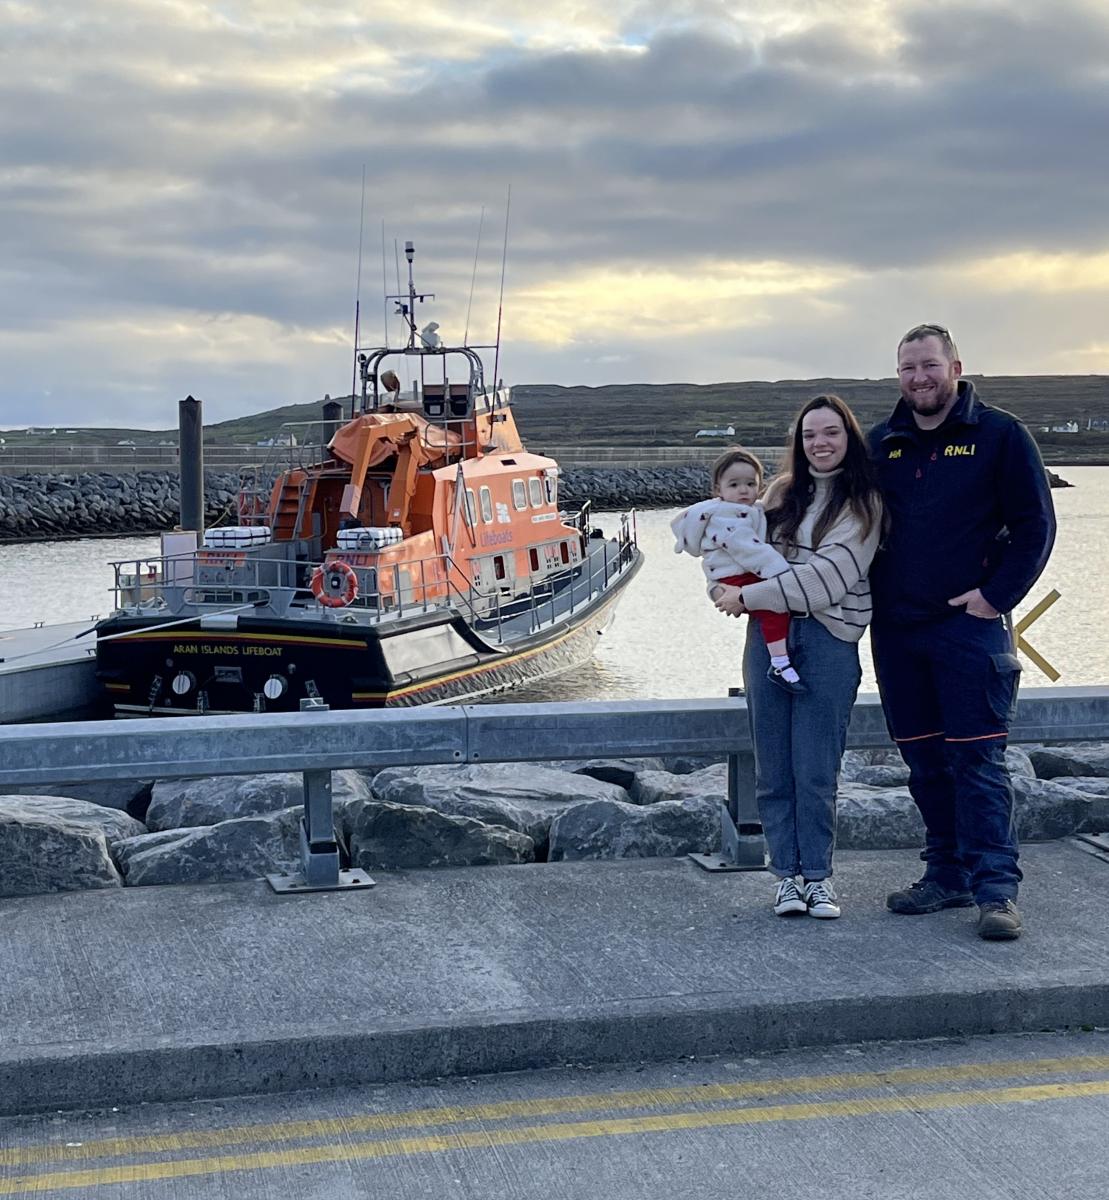 Aran lifeboat’s new Coxswain prepares for Christmas on call